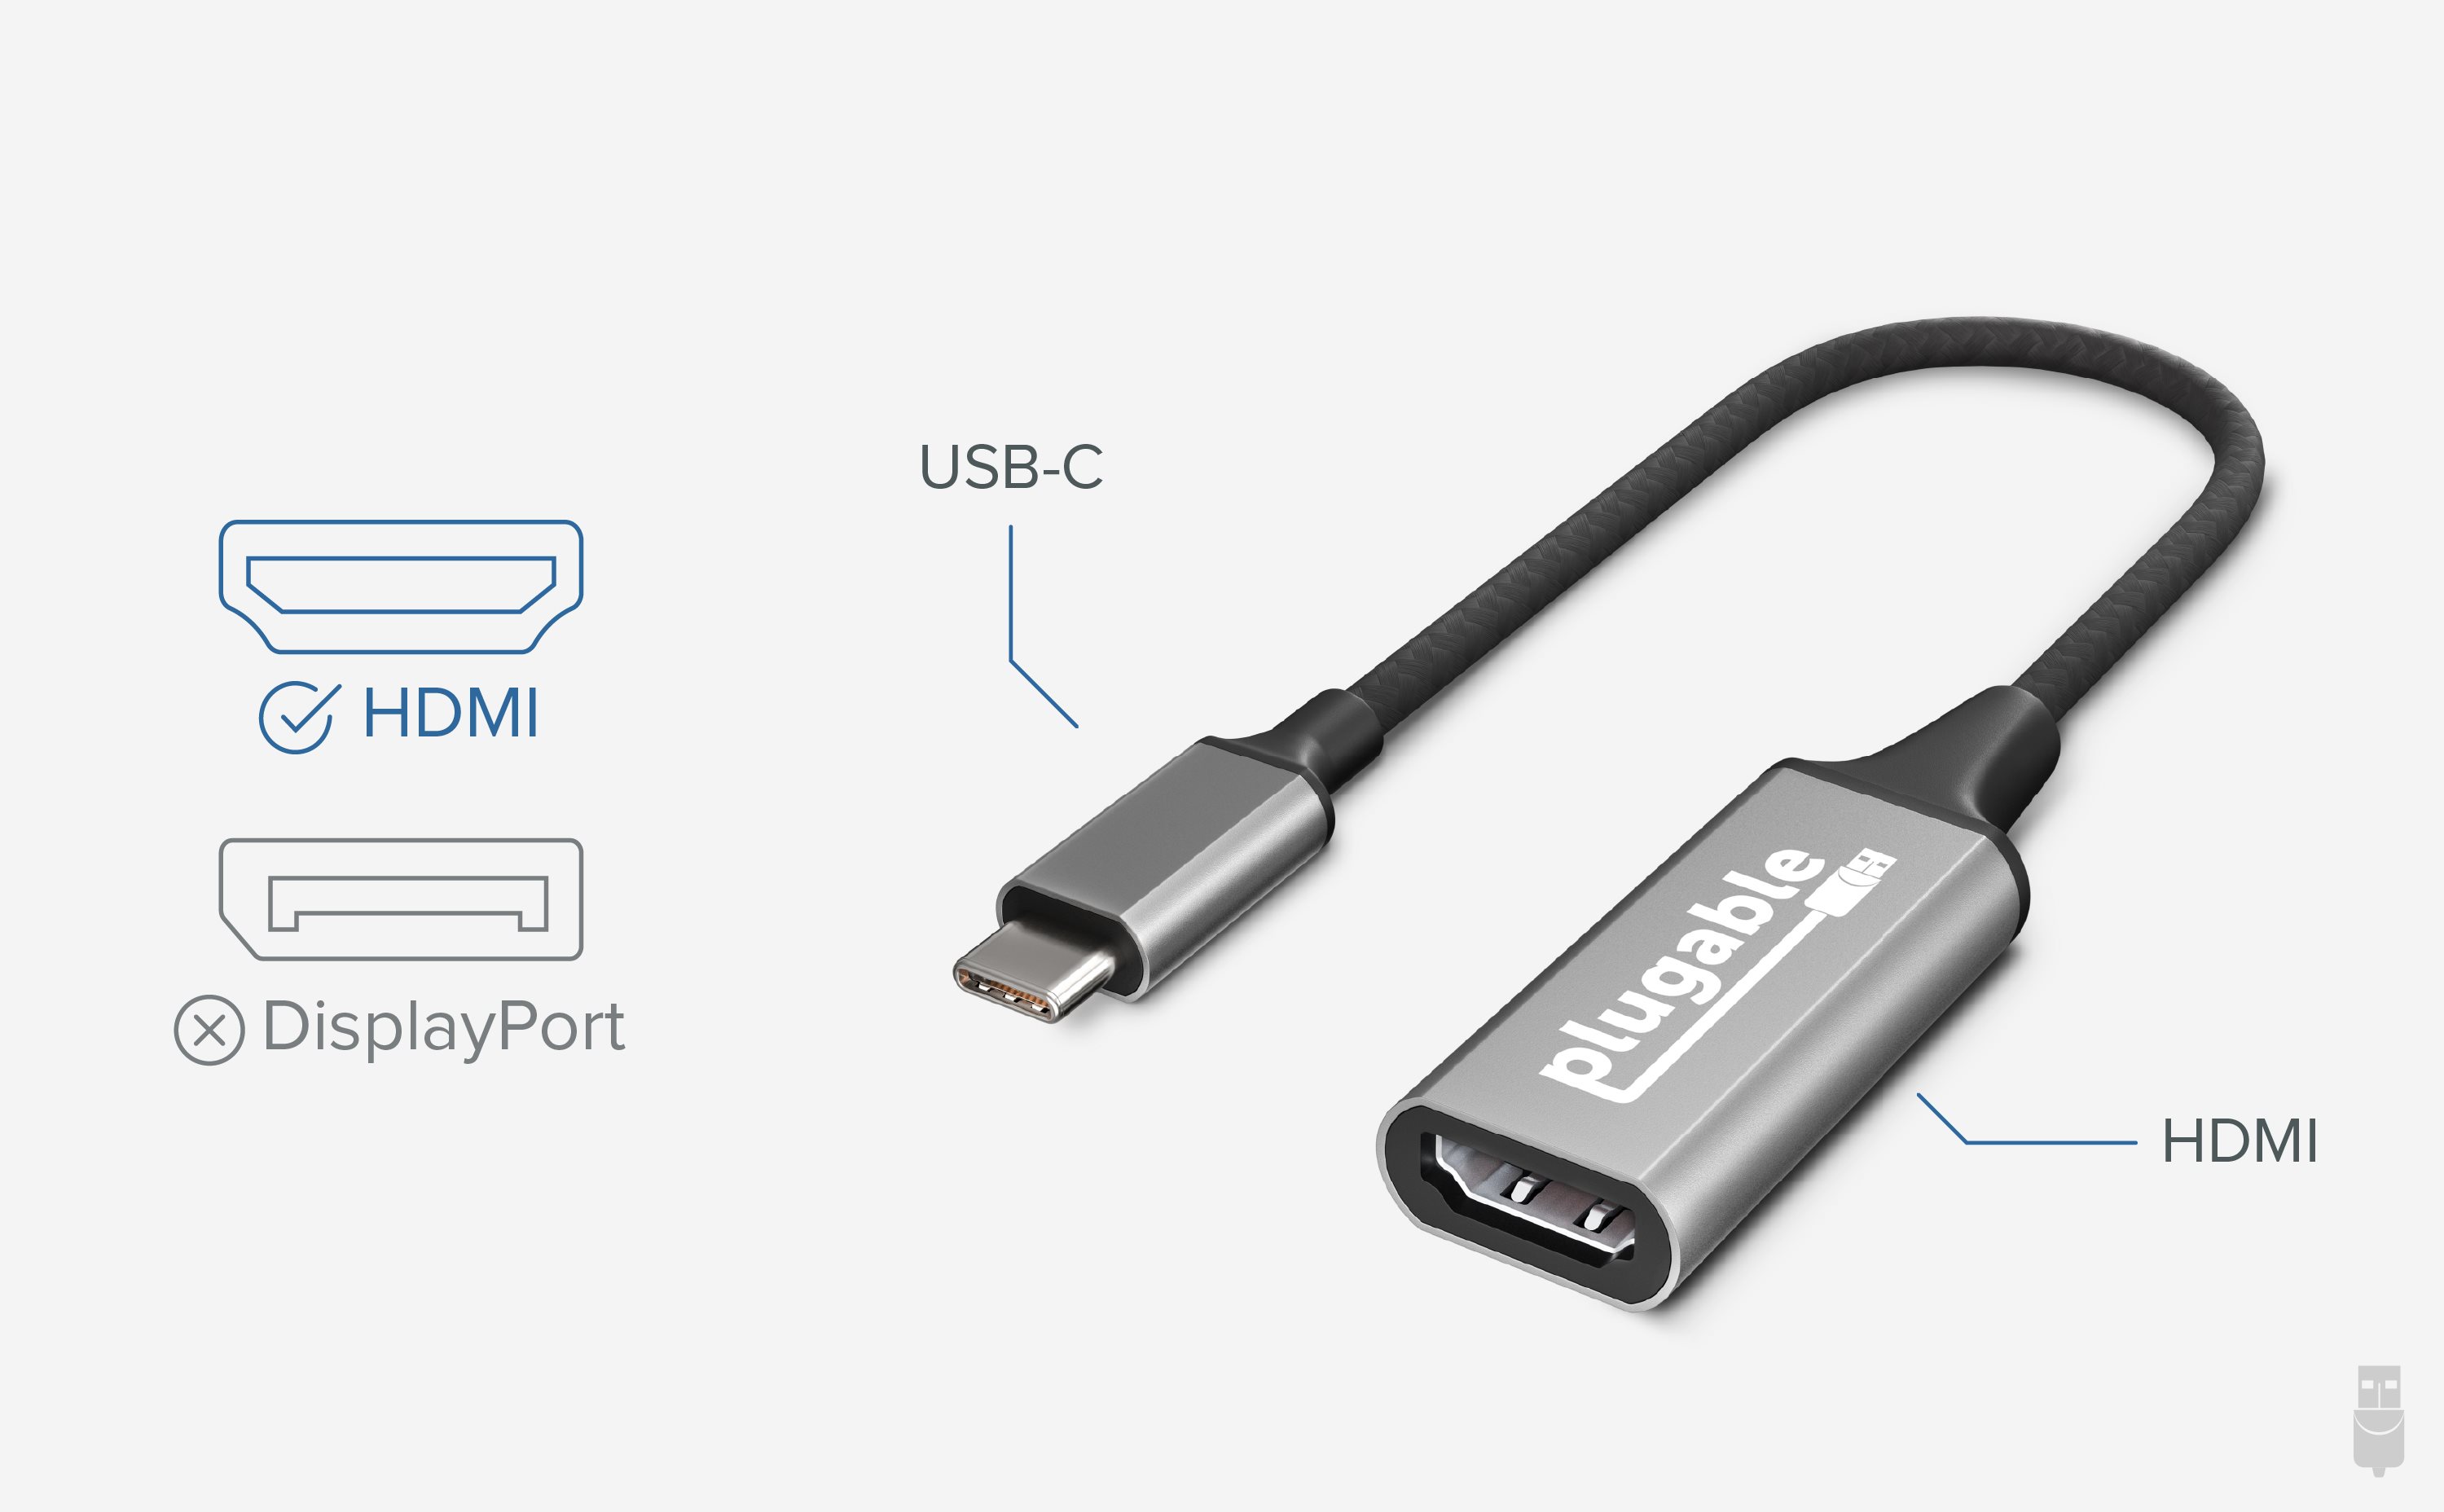 Plugable USB-C Quad HDMI Adapter review: More screens, less clarity